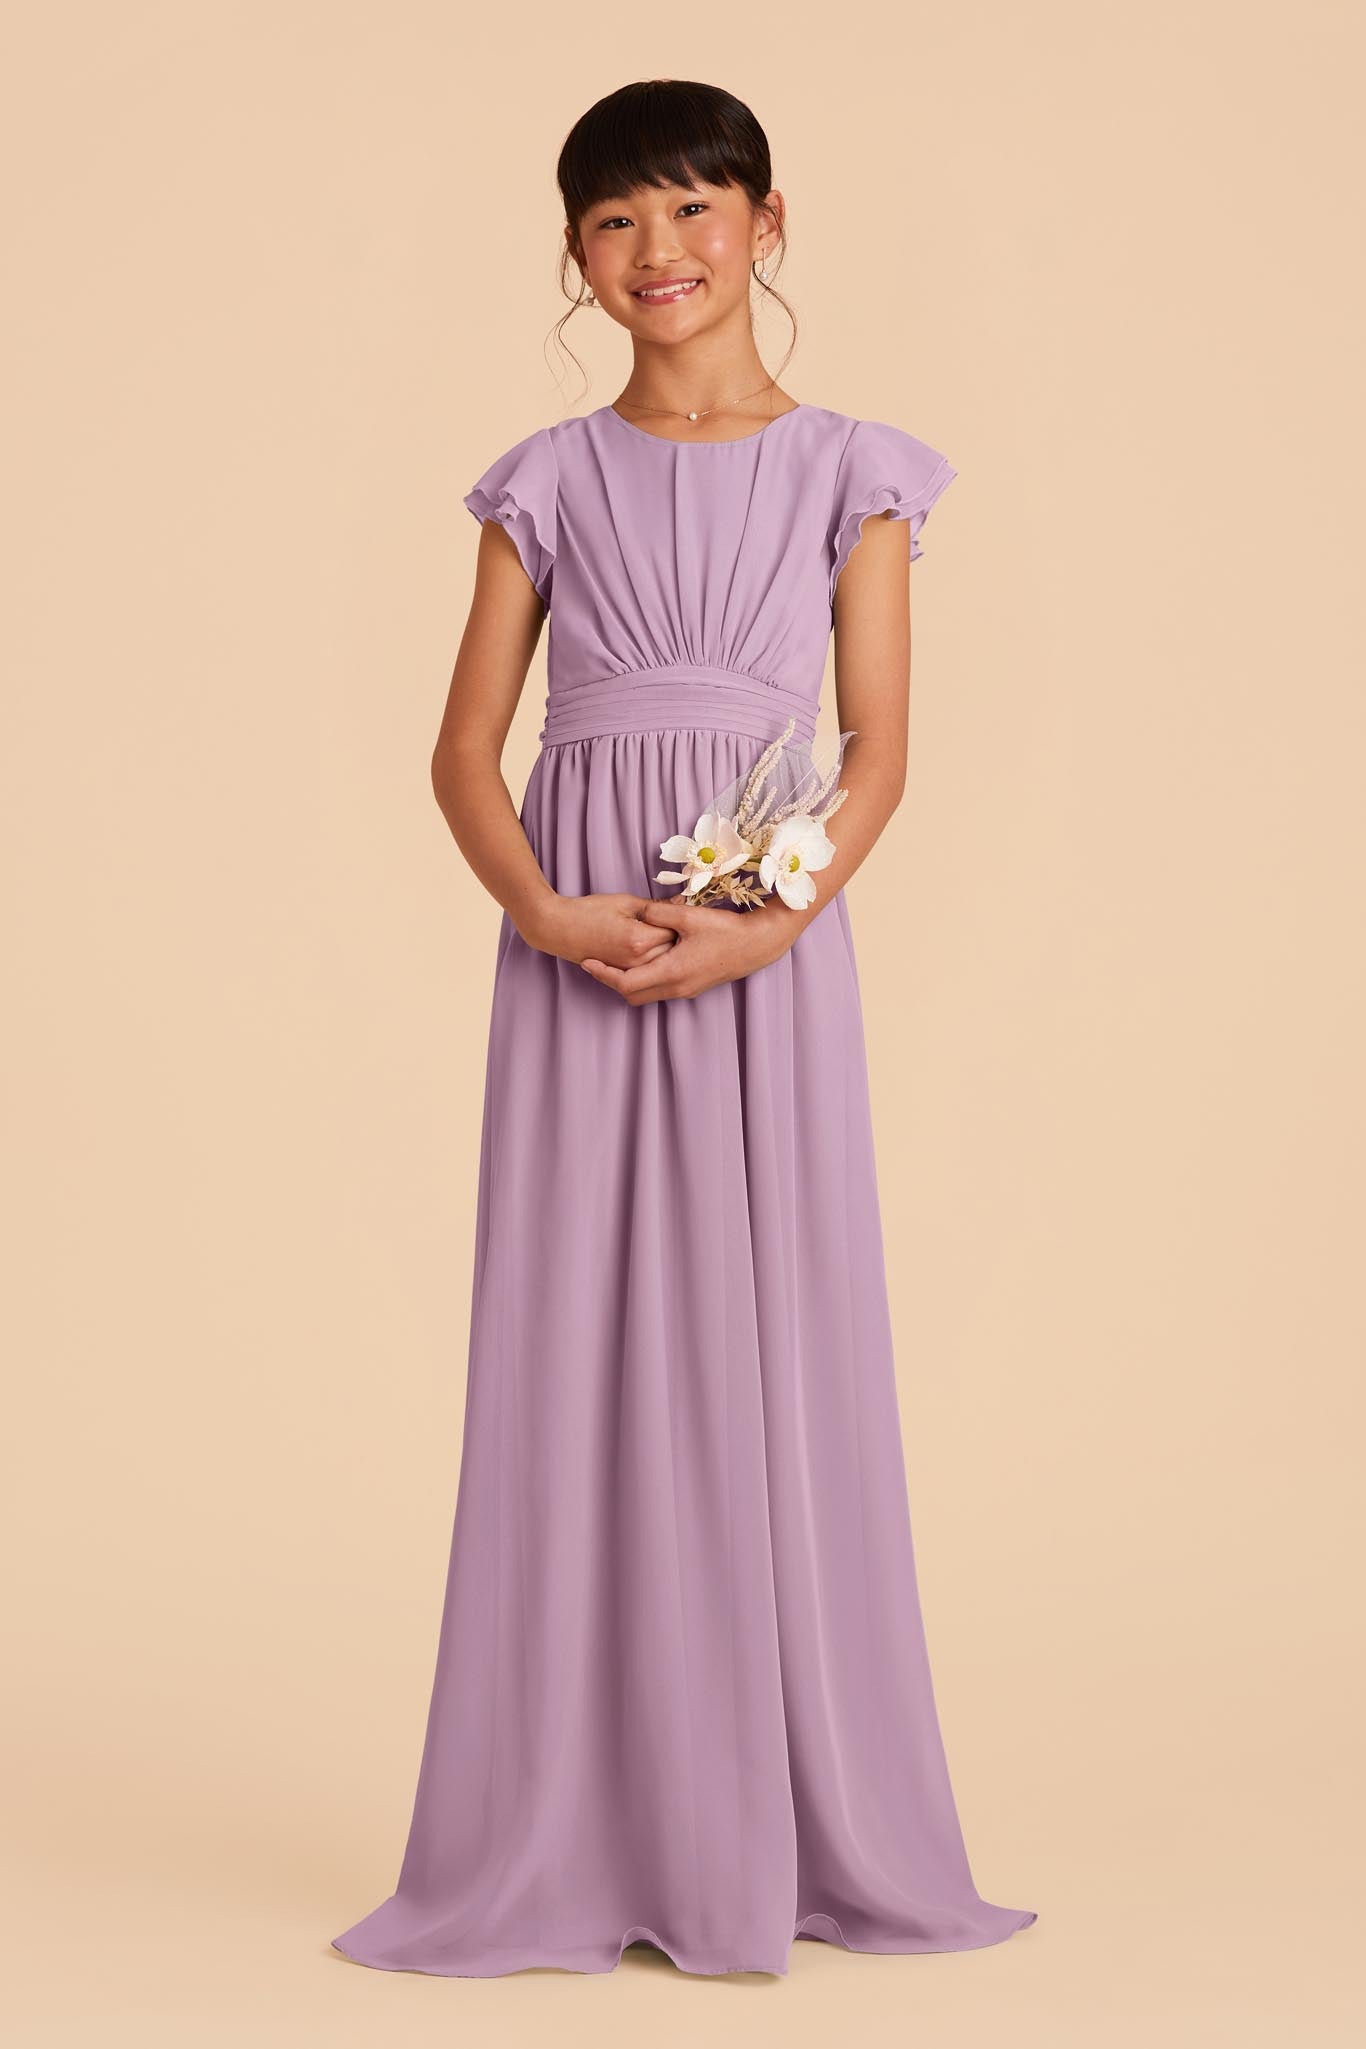 Lavender Celine Junior Dress by Birdy Grey